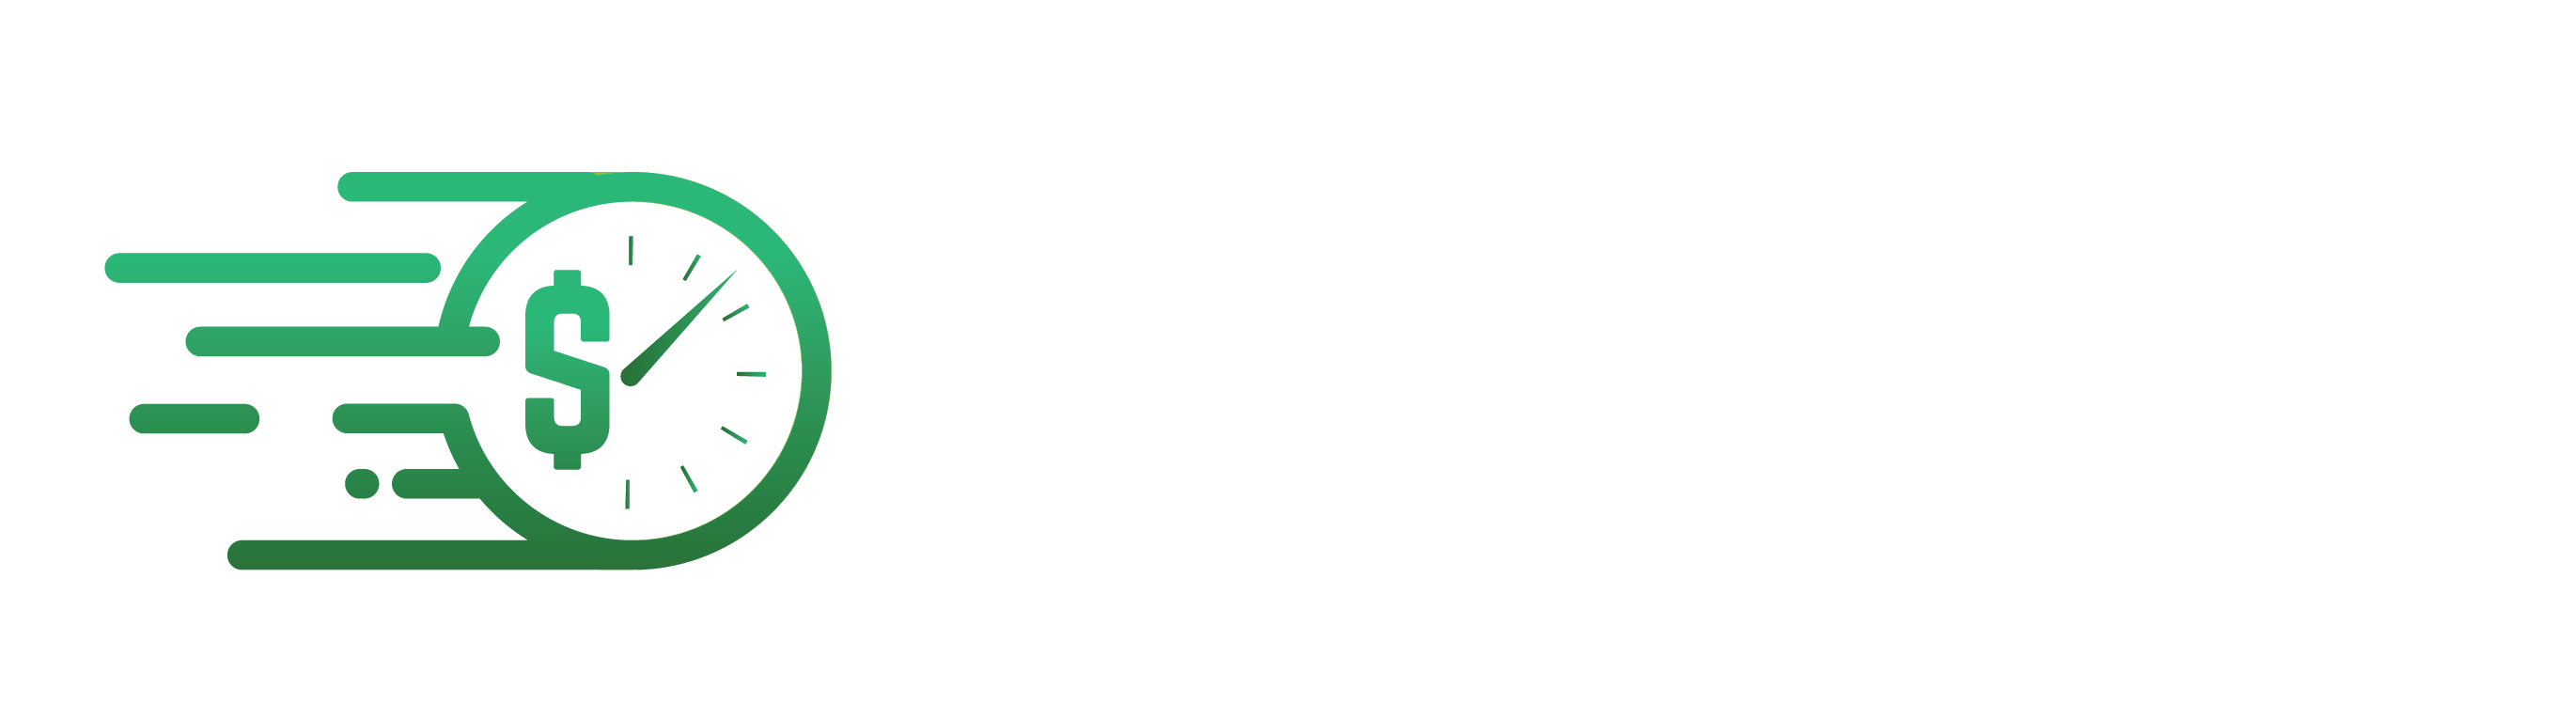 Cashinsecond 